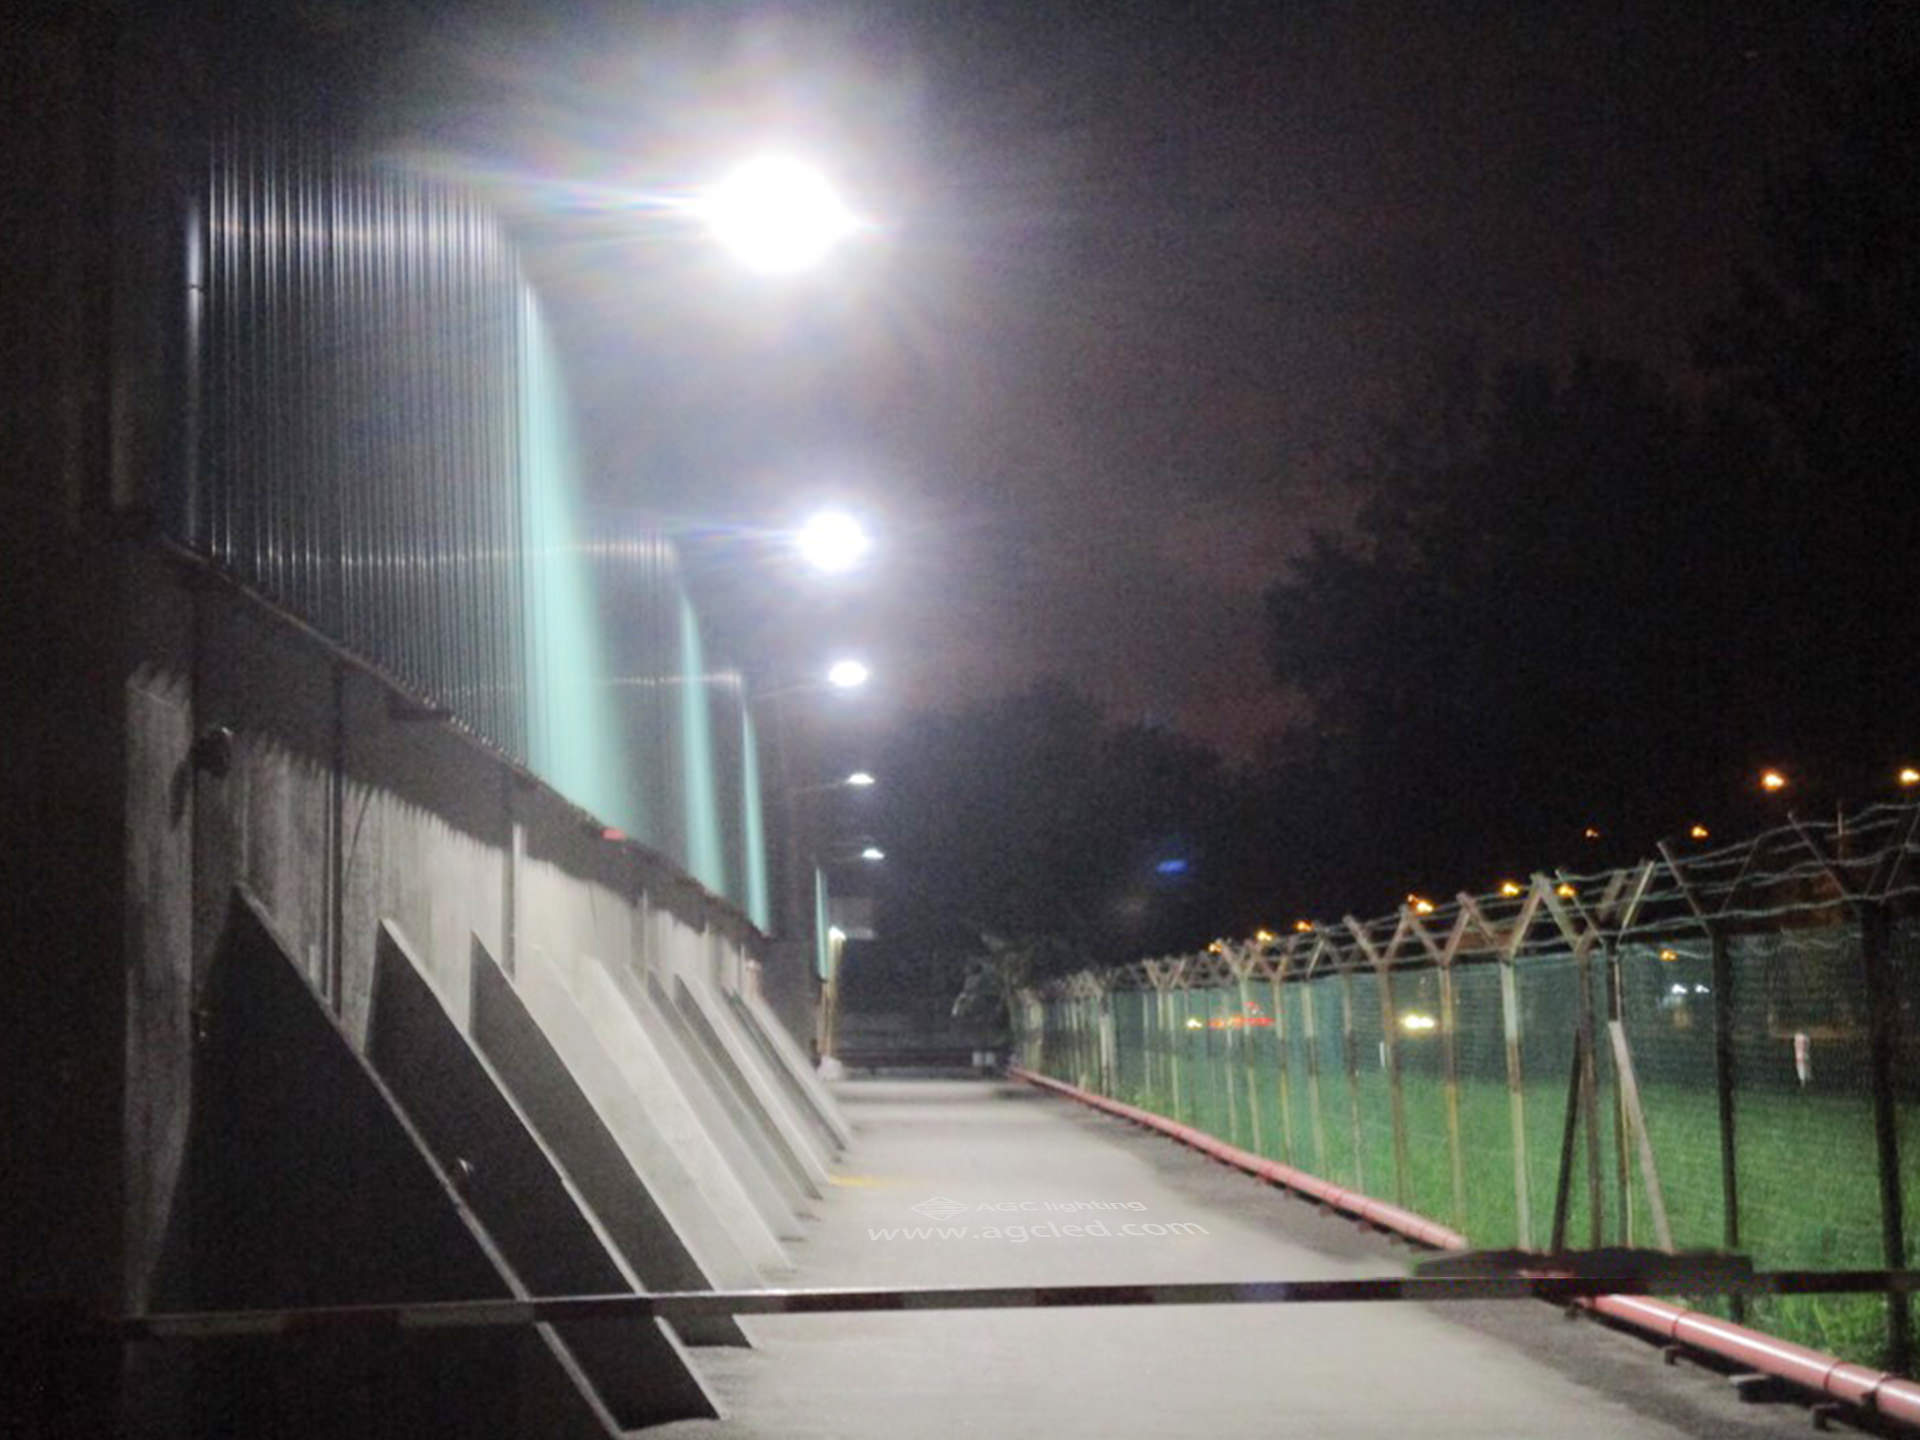 walkway lighting project with 120w street light